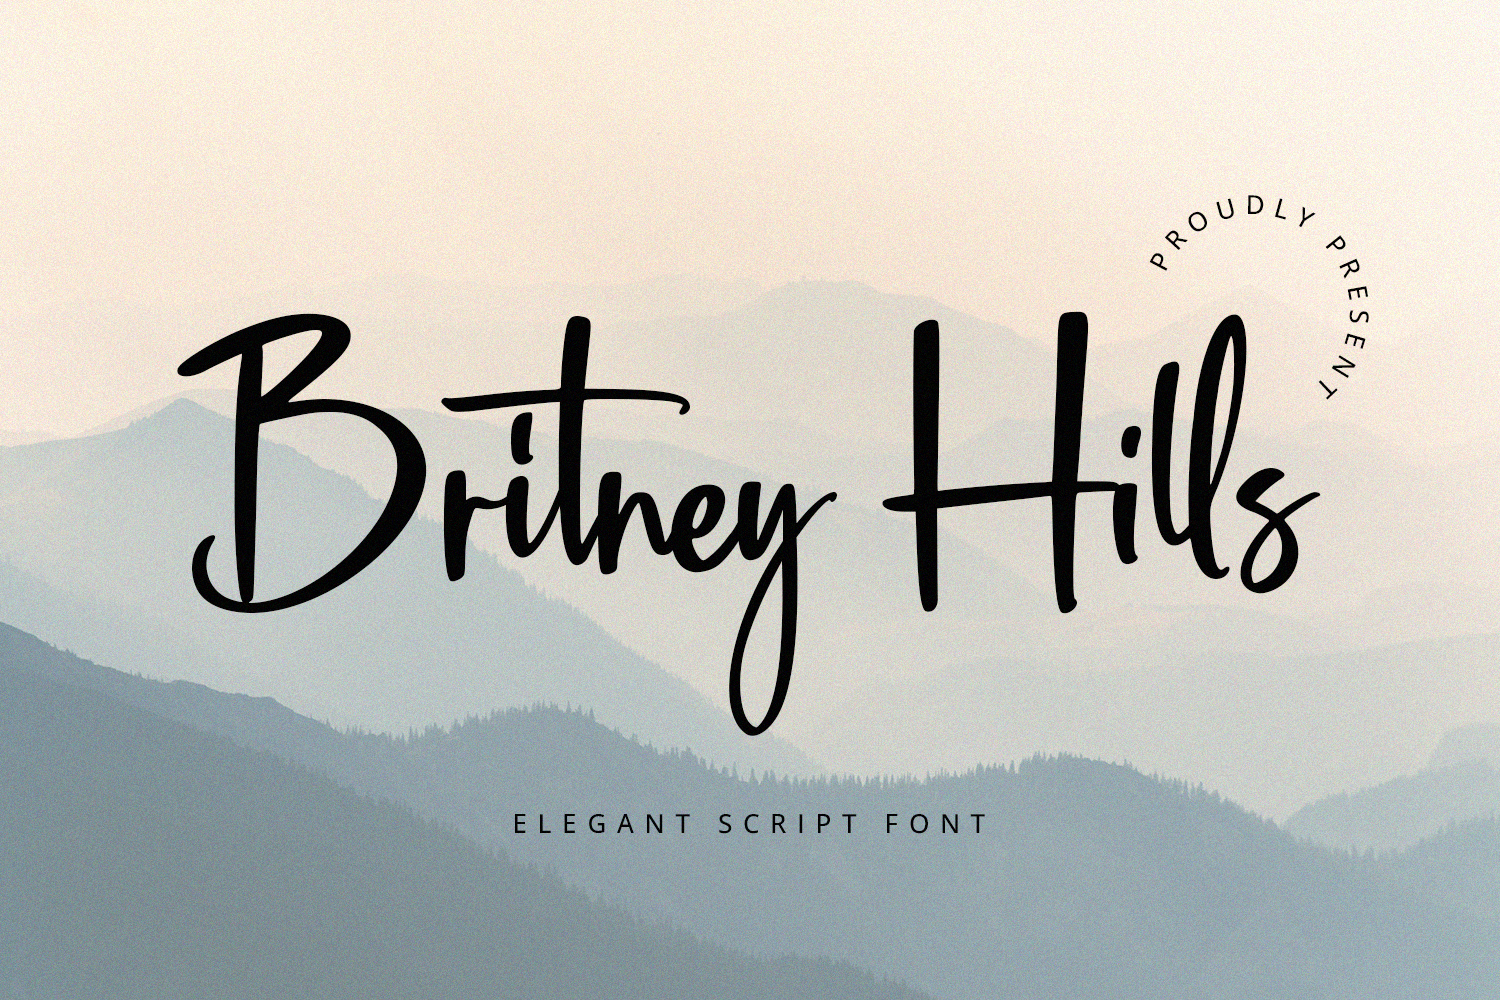 Britney Hills Free Font